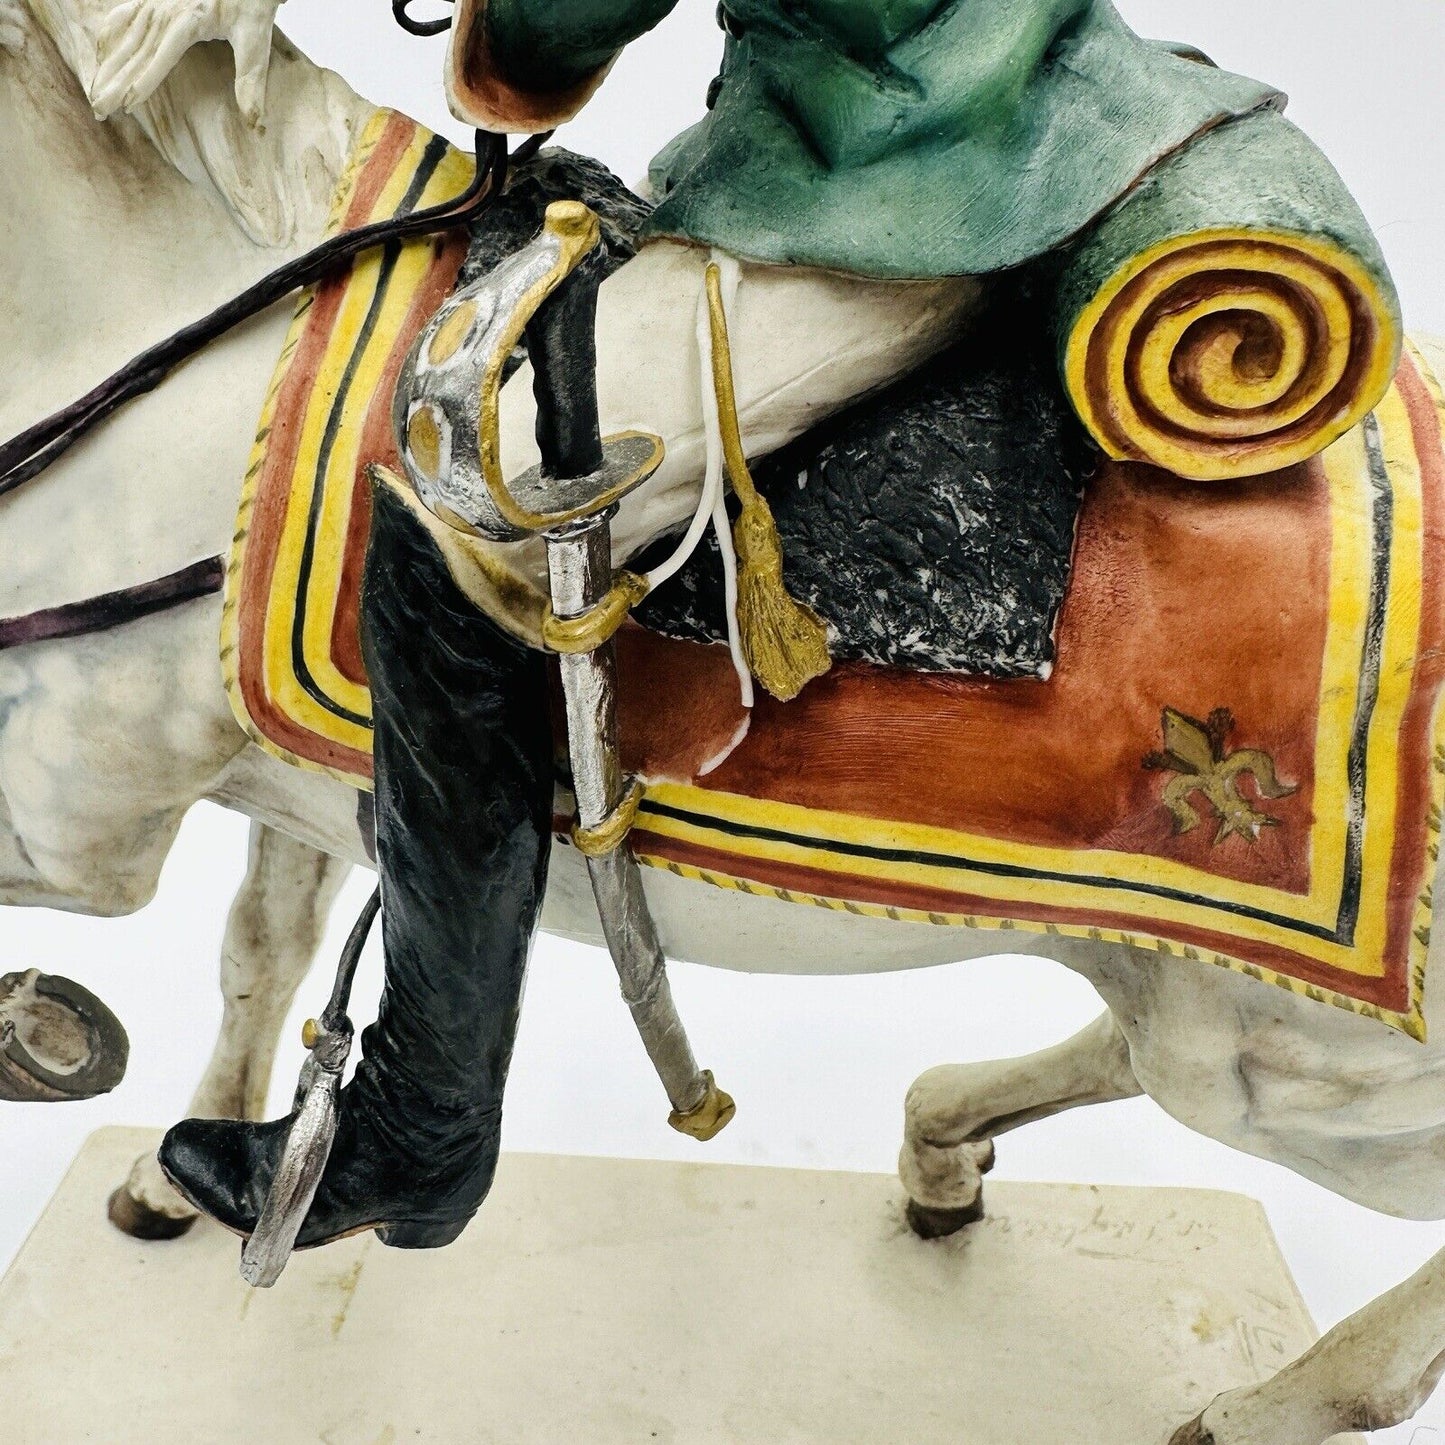 Tay Horse Solider Sculpture Giuseppe Tagliariol Bepi Austrian Empire 7/100 Art